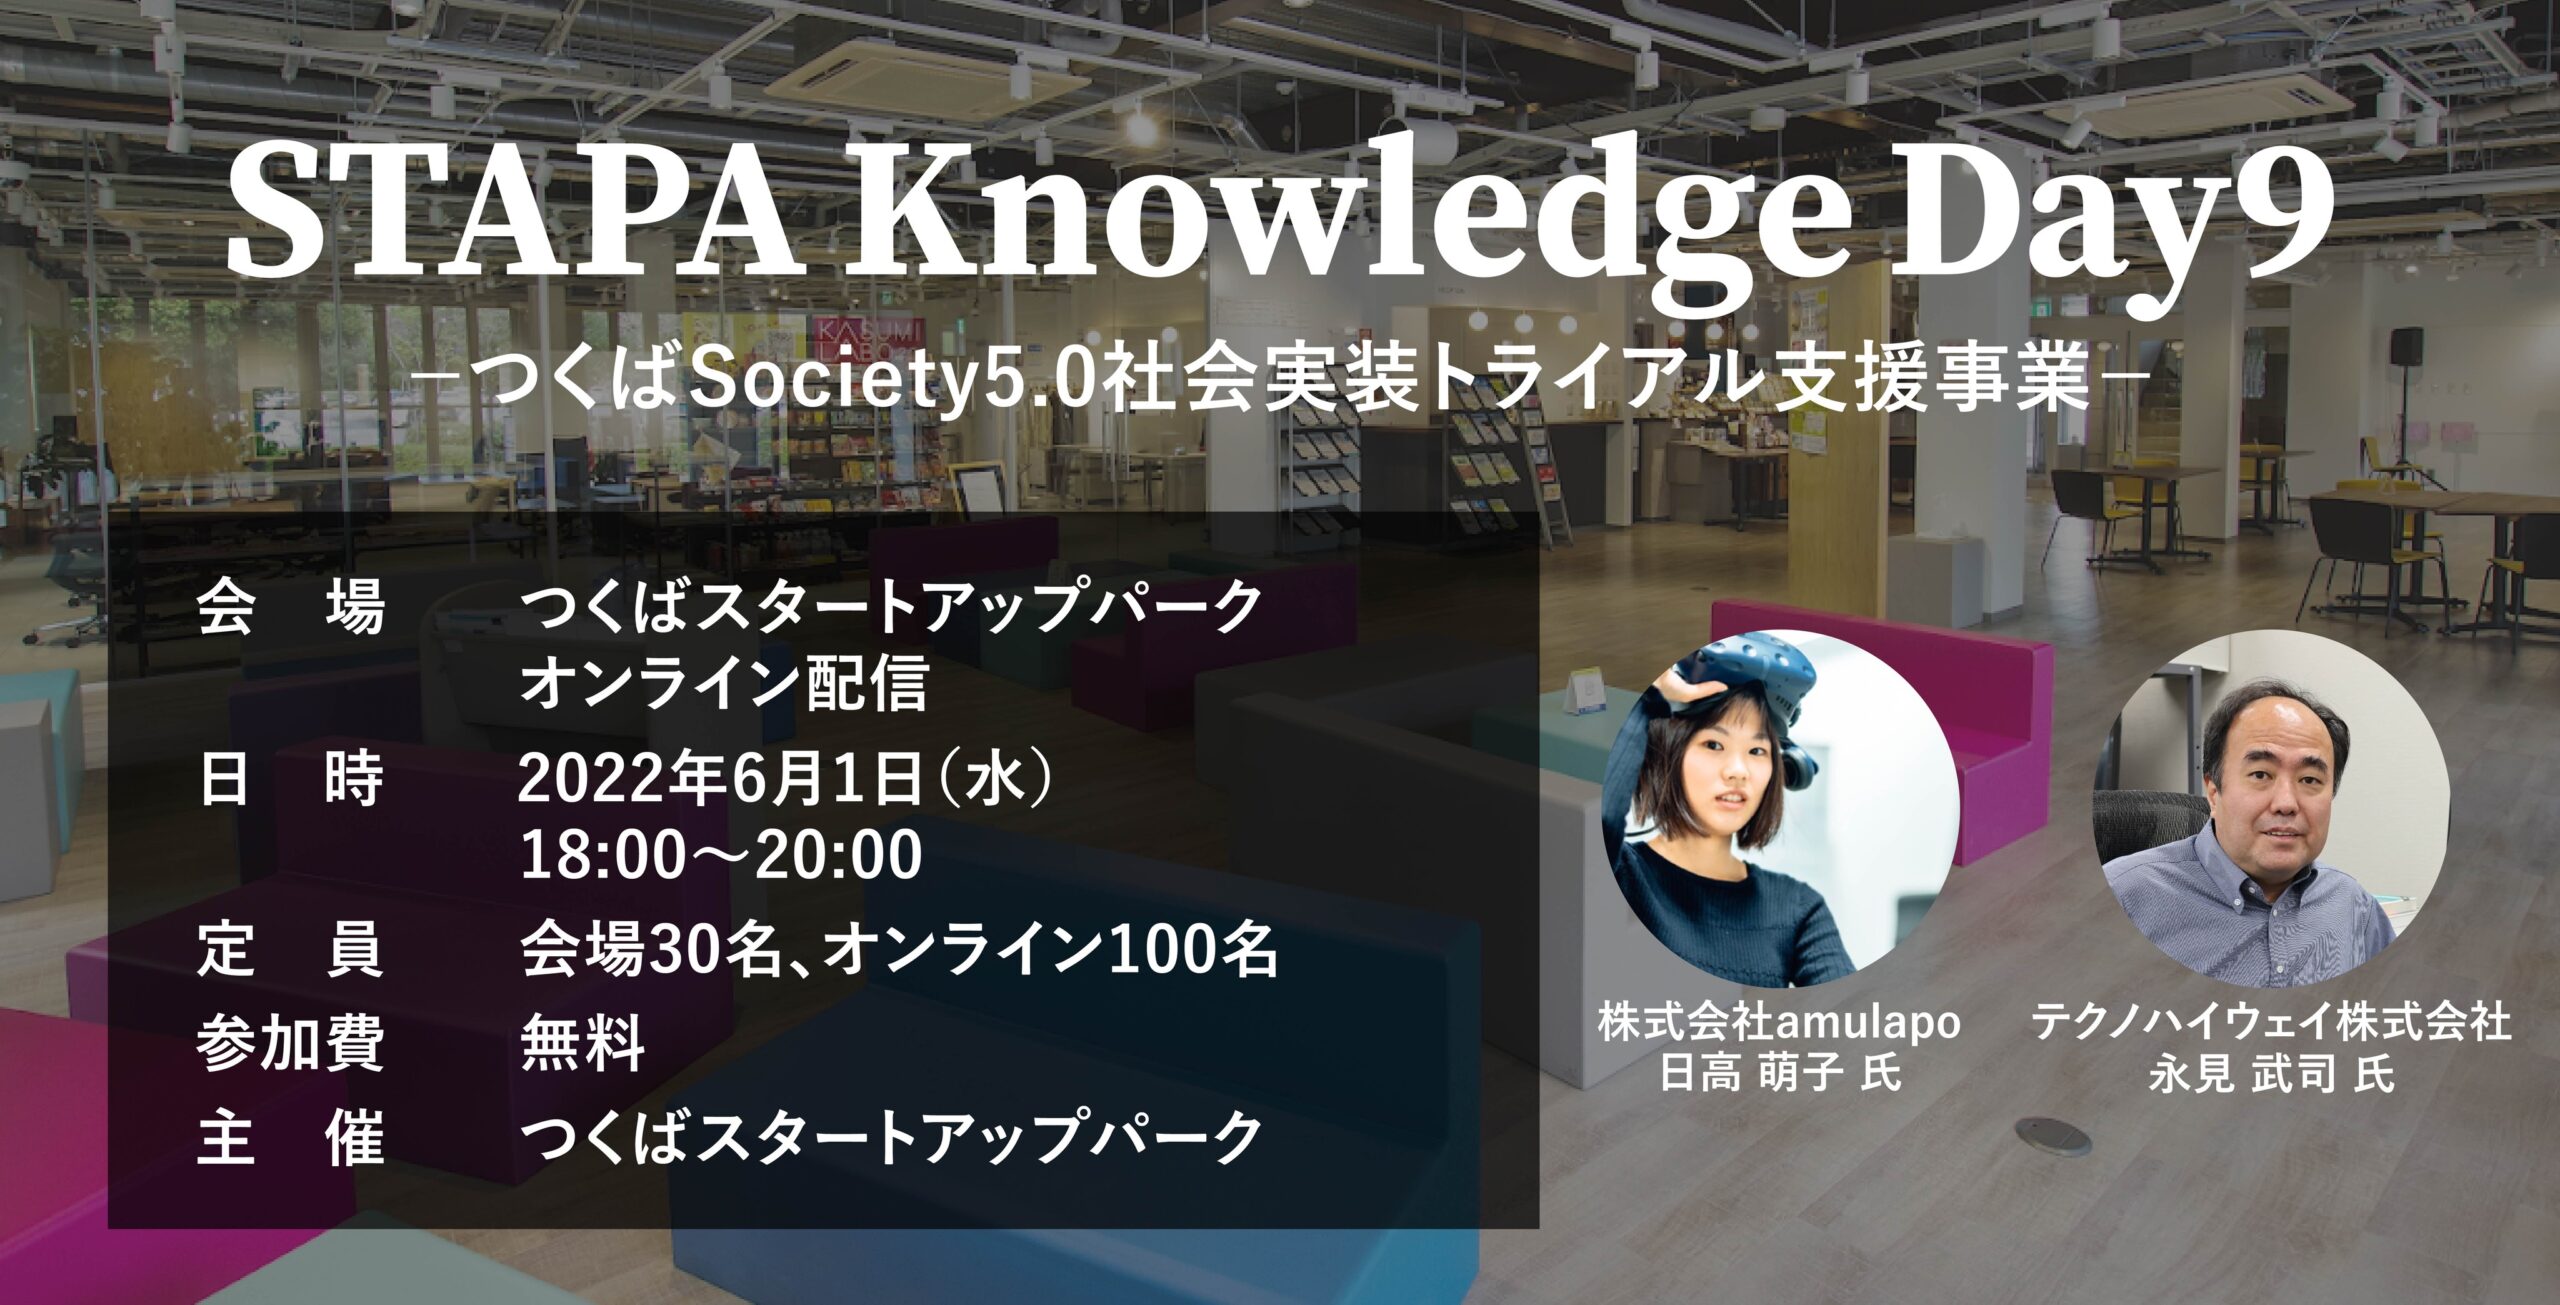 STAPA Knowledge Day9 －つくばSociety5.0社会実装トライアル支援事業－